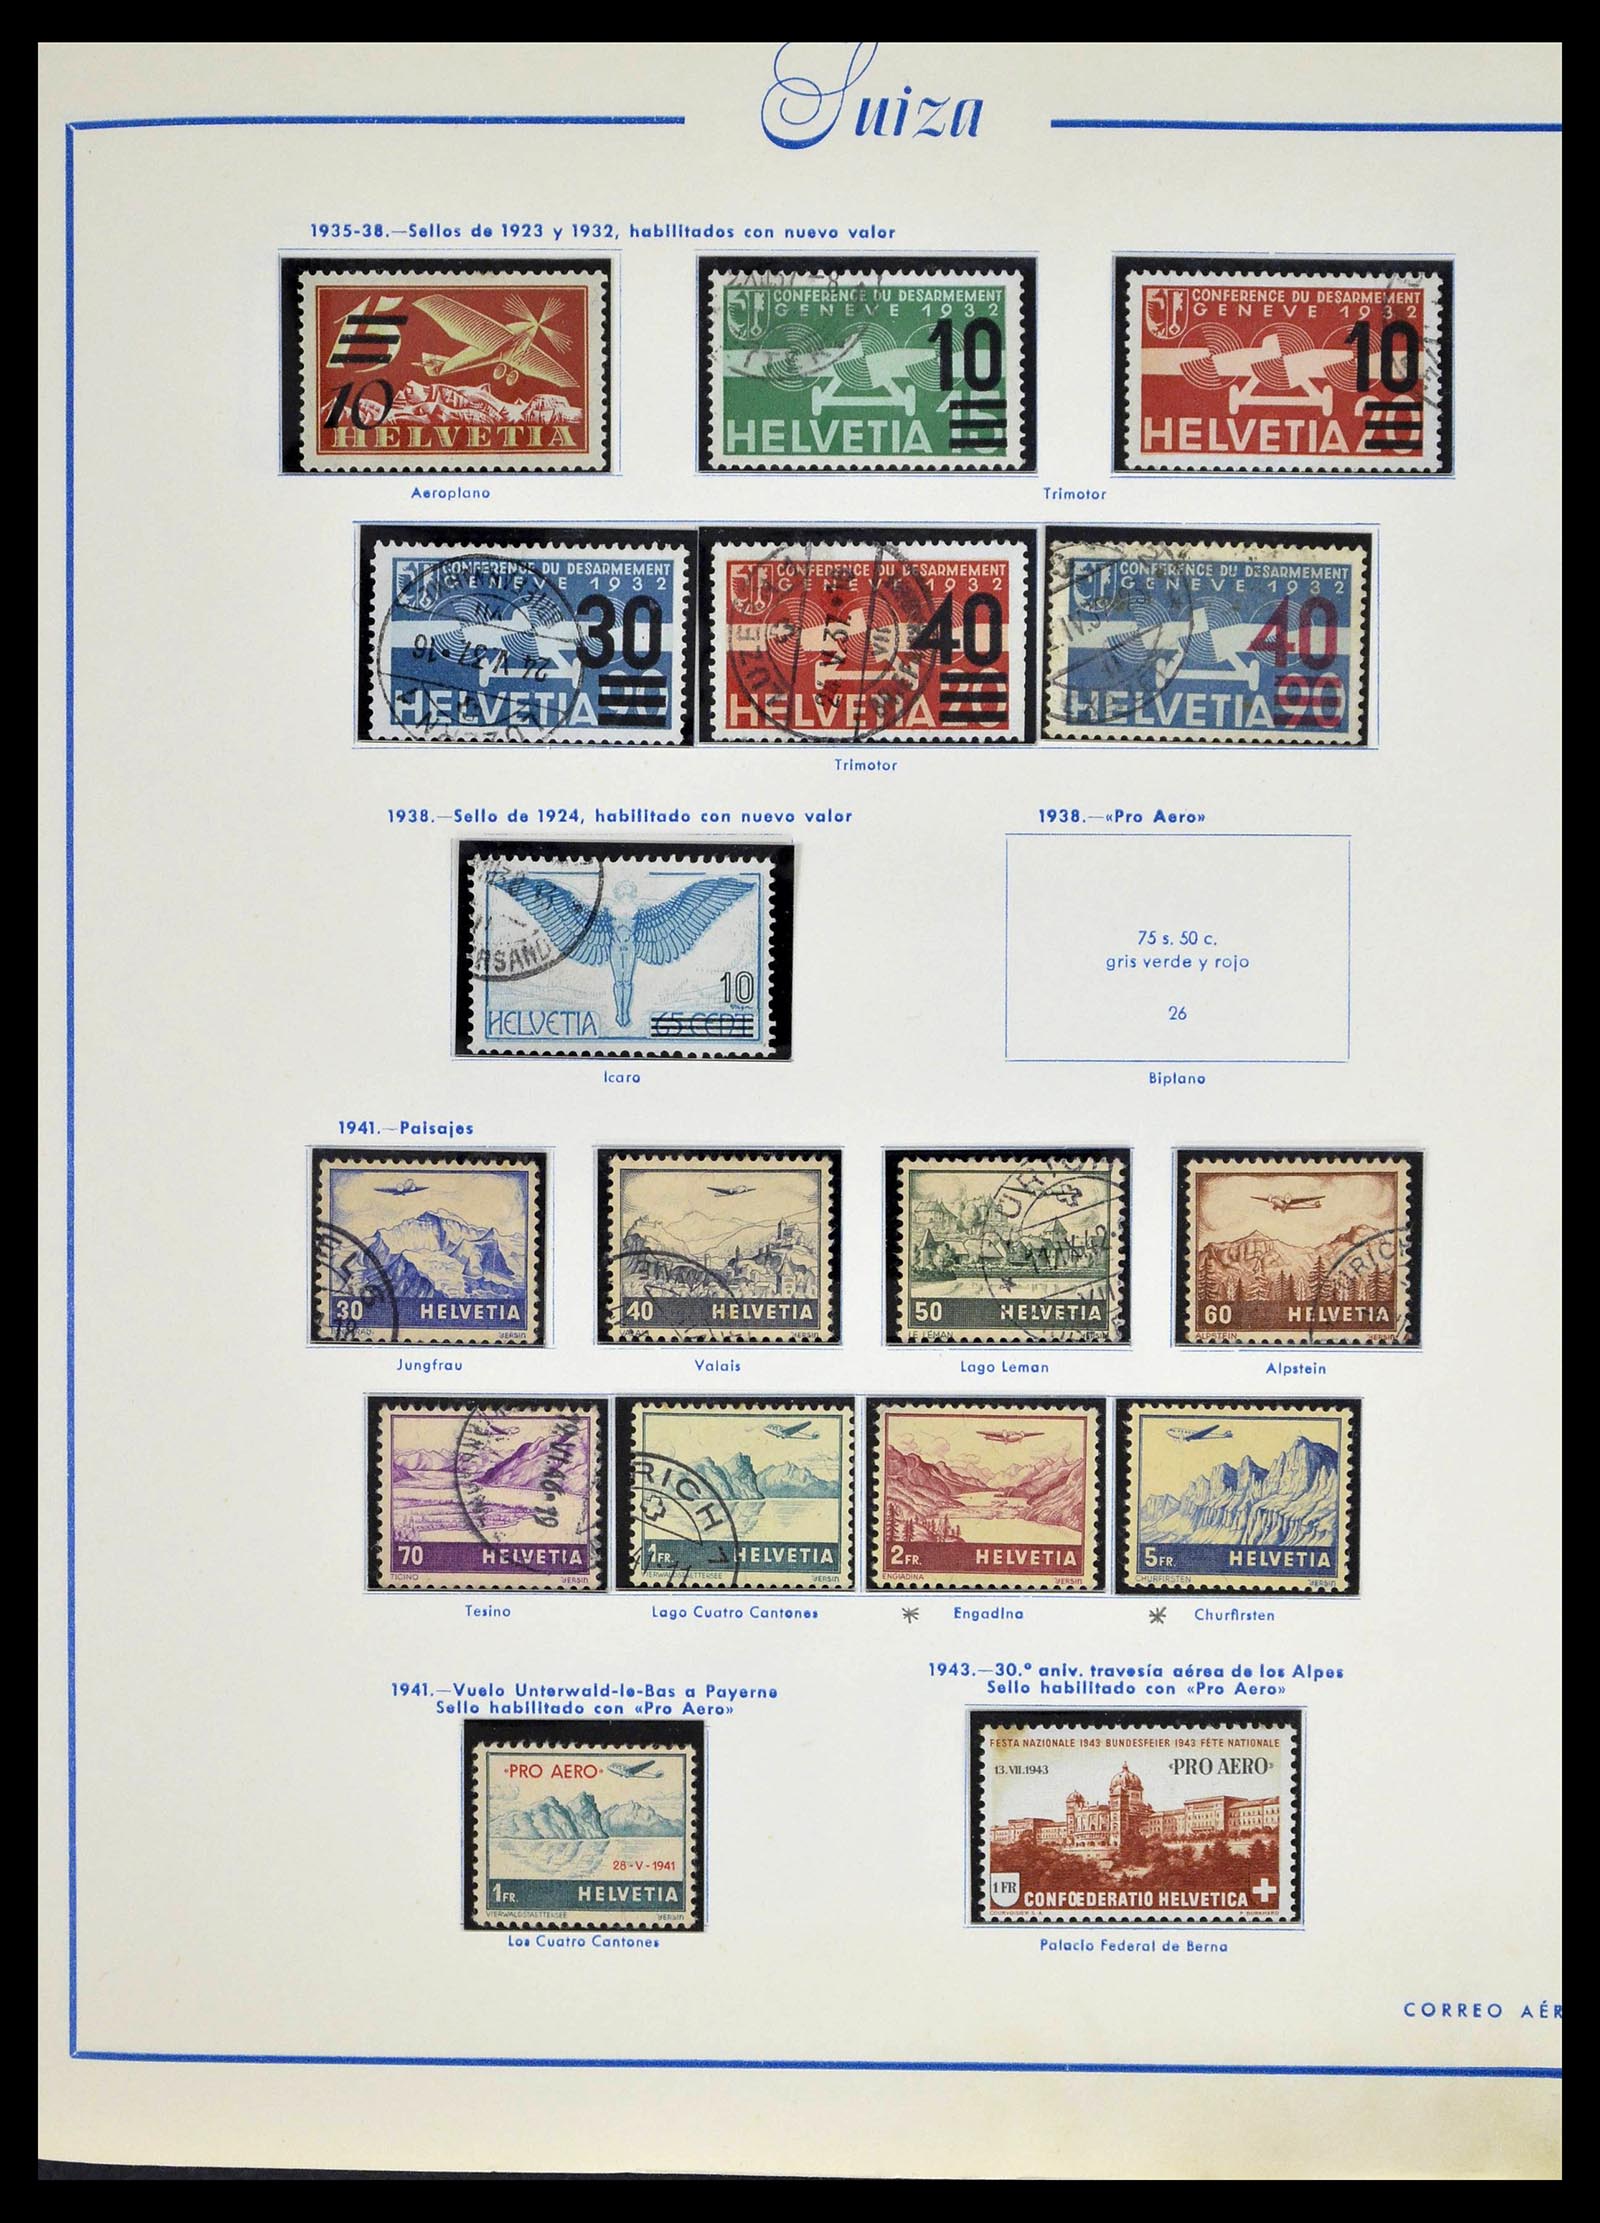 39217 0088 - Stamp collection 39217 Switzerland 1850-1986.